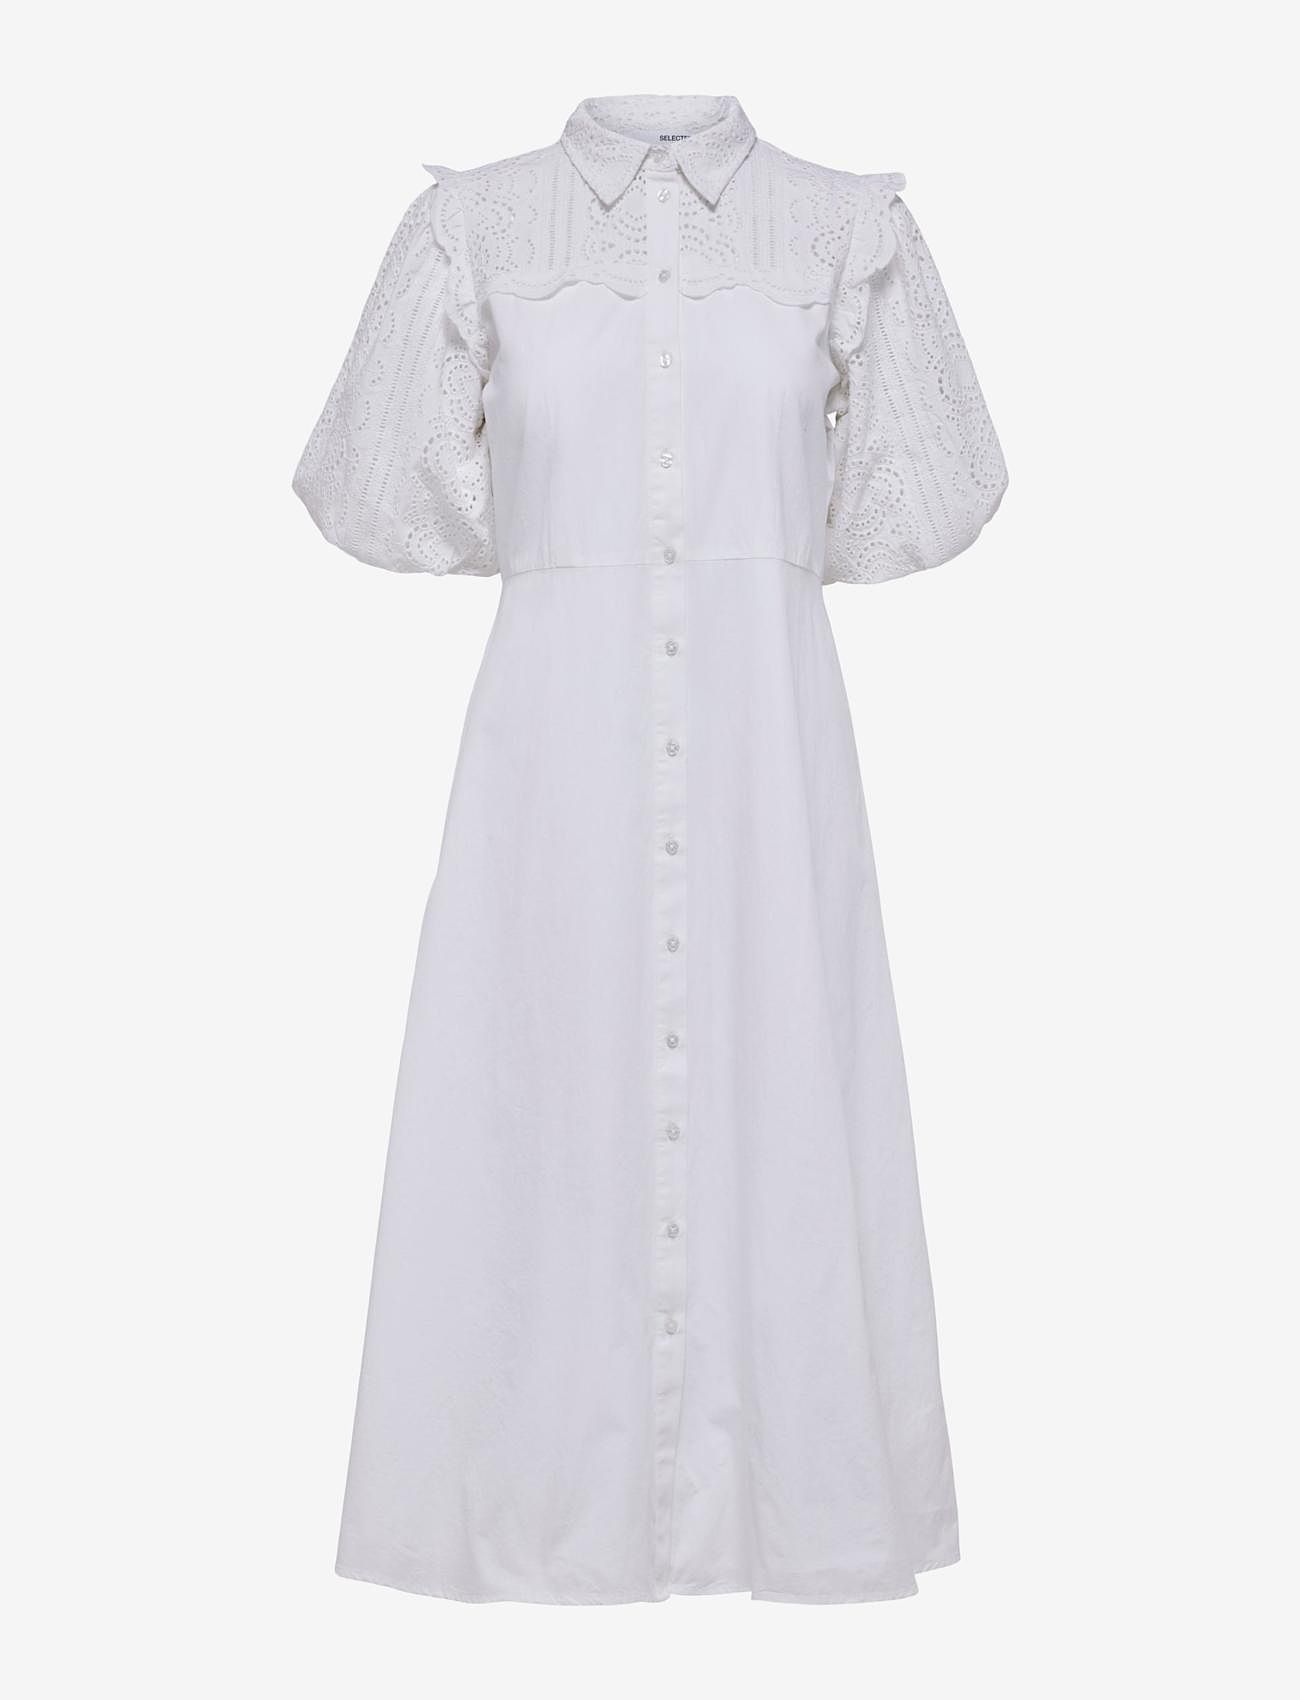 Selected Femme - SLFVIOLETTE 2/4 ANKLE BRODERI DRESS B - sukienki koszulowe - bright white - 0